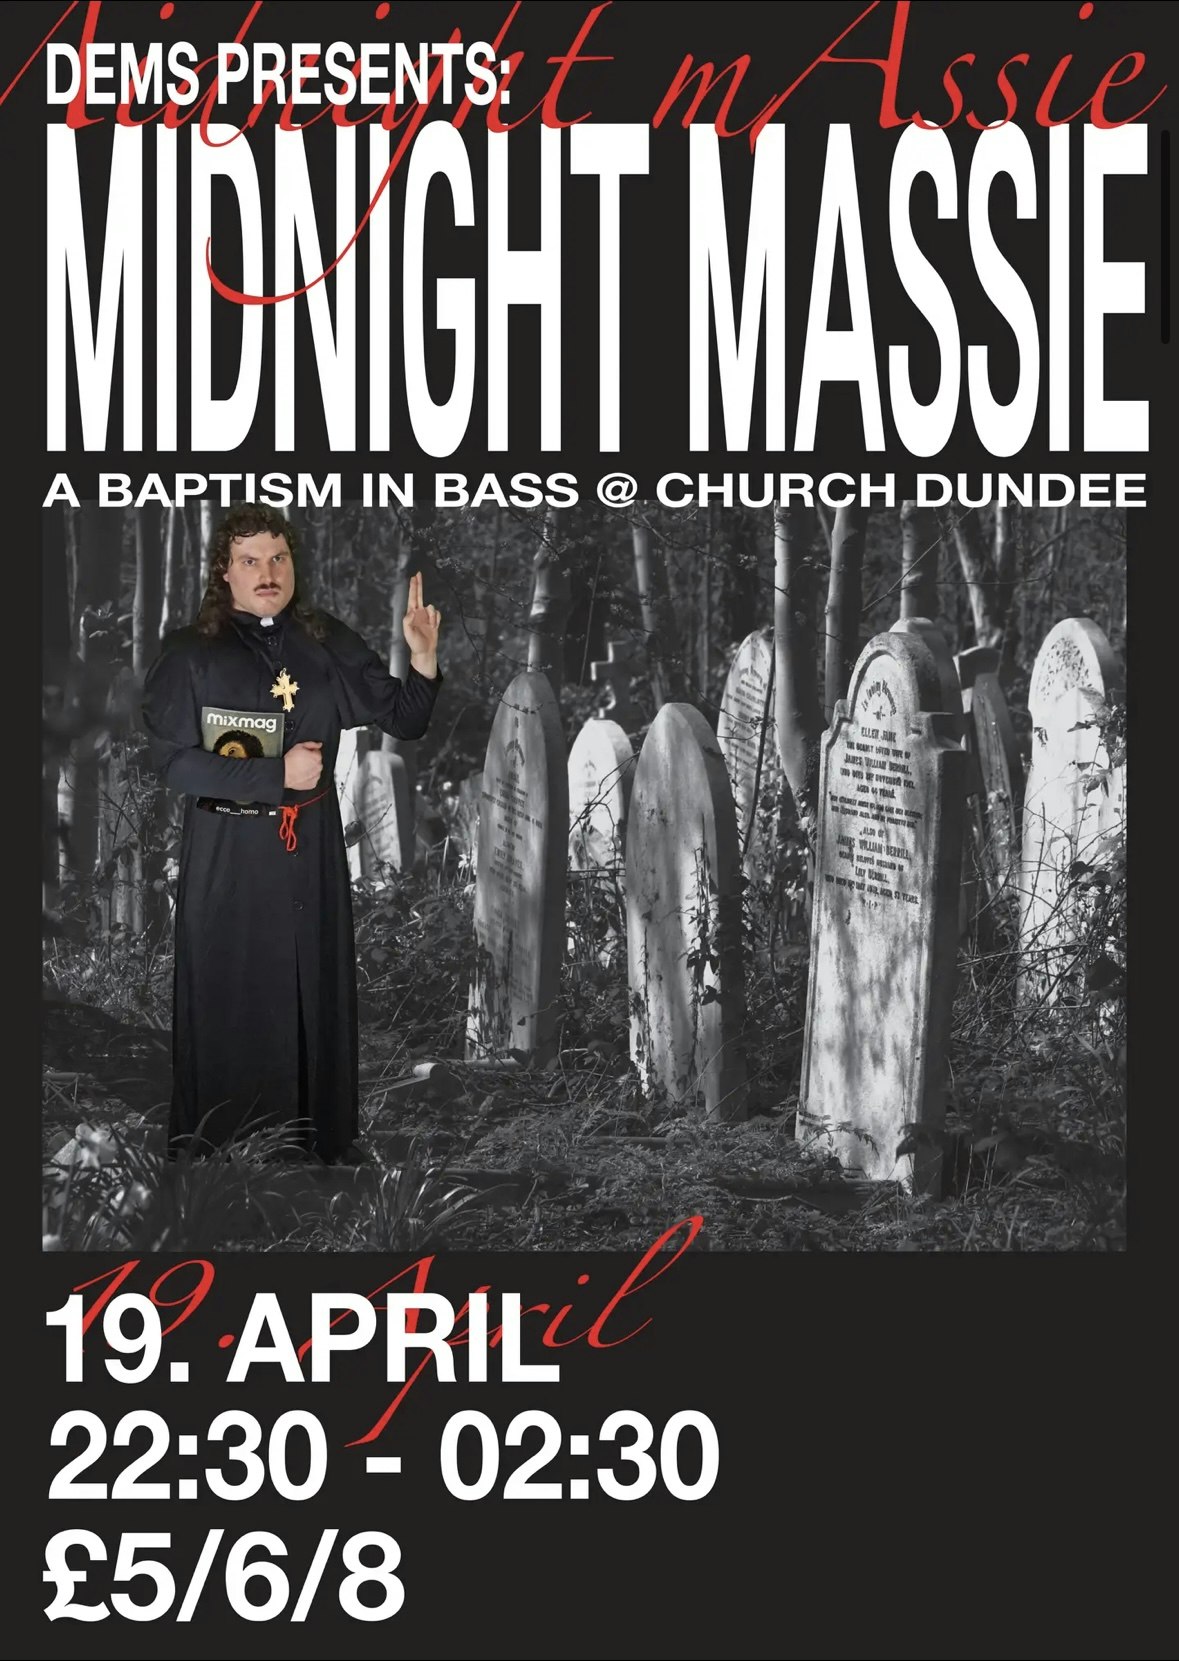 DEMS presents: Midnight Massie Club